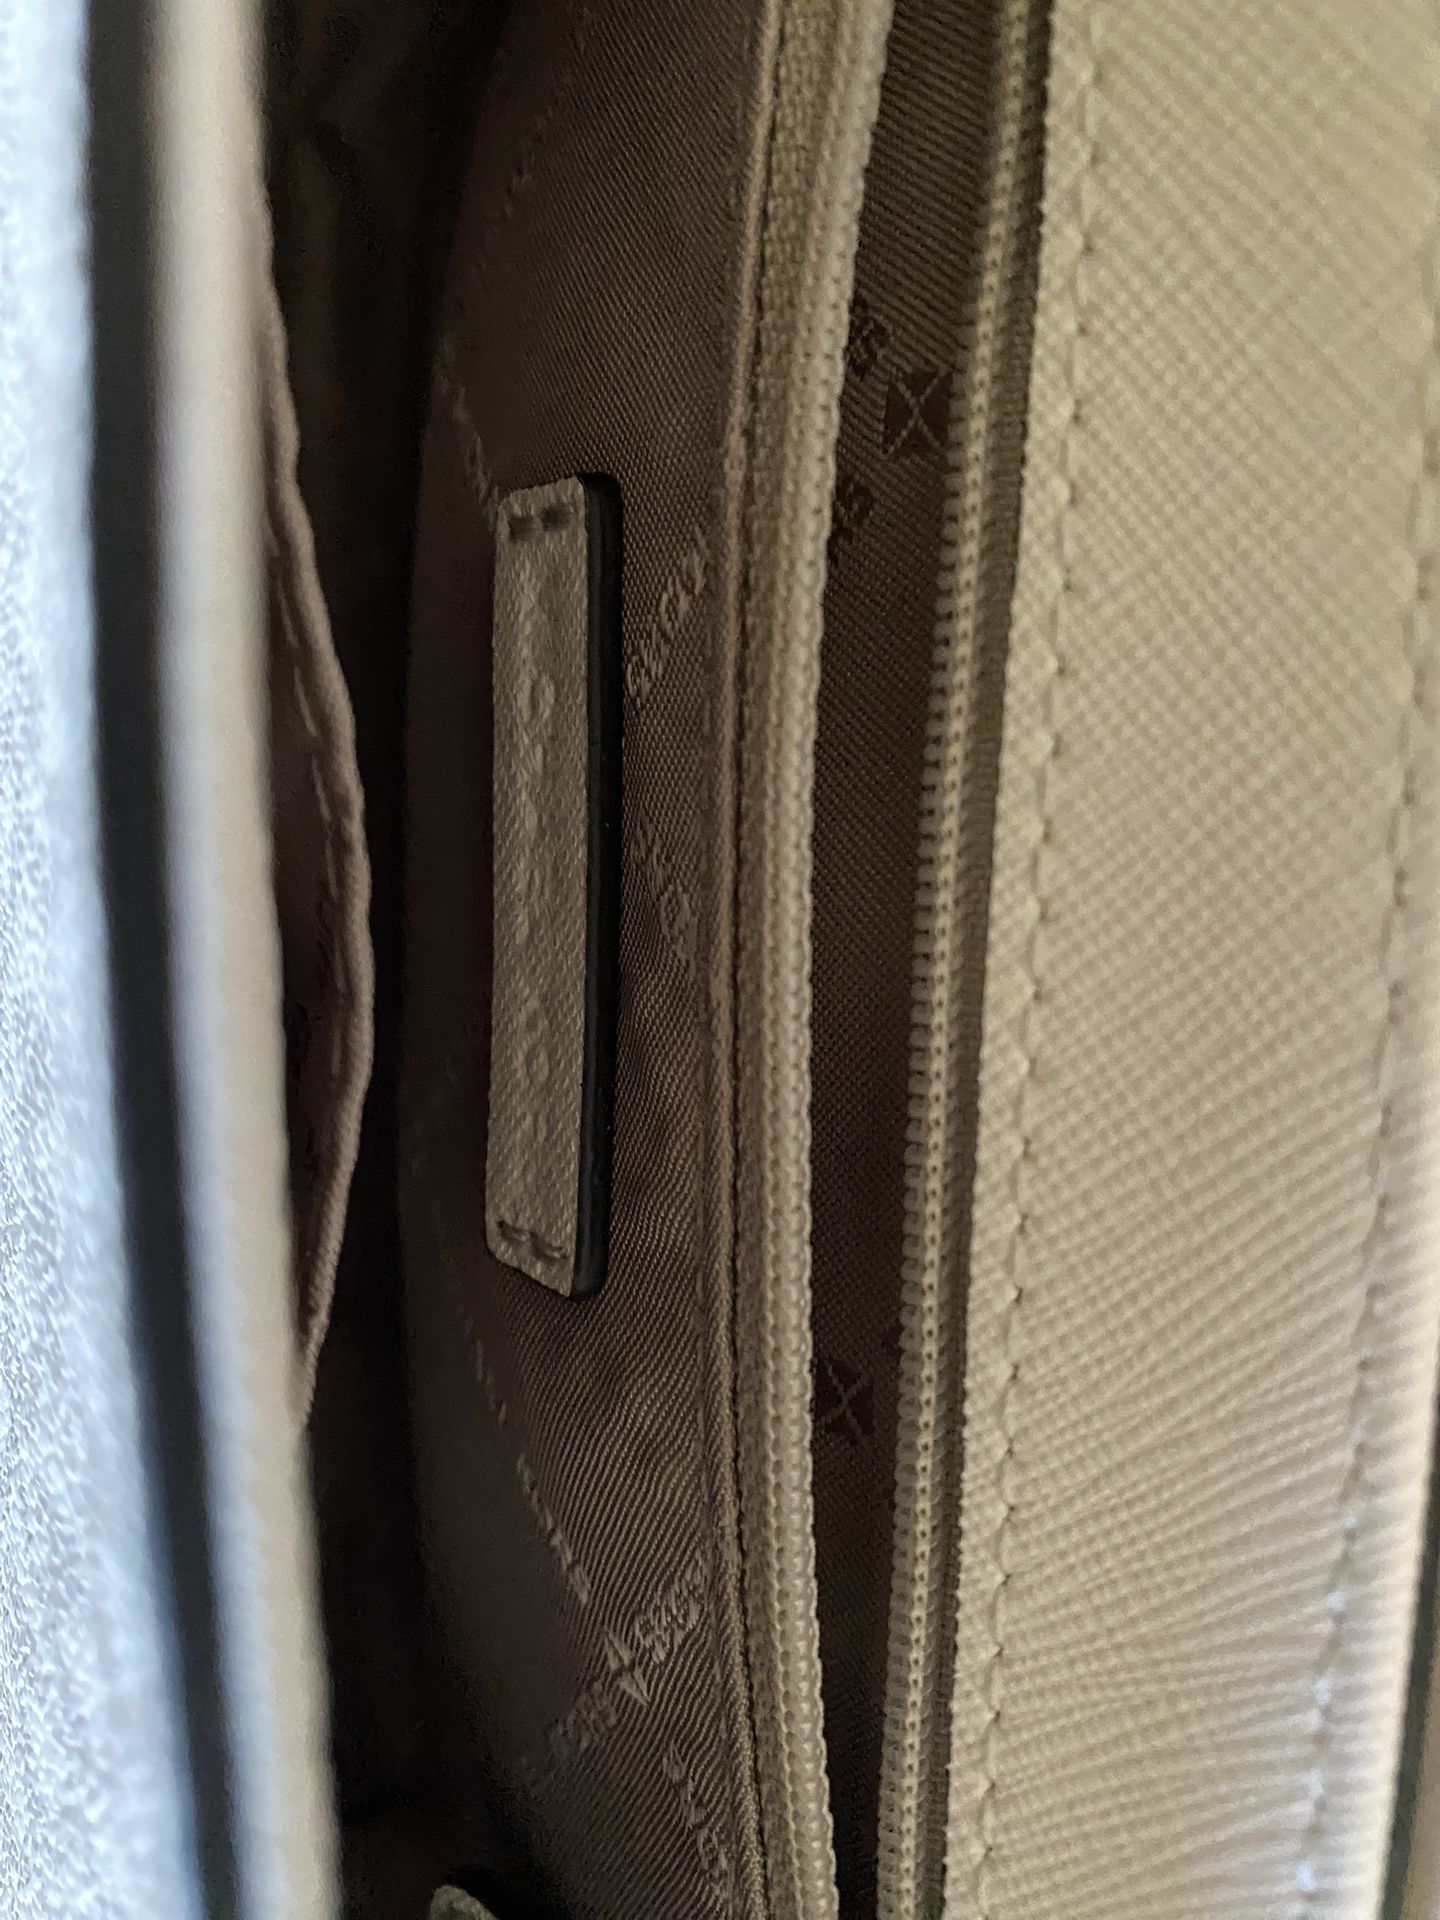 Medium Logo Convertible Crossbody Bag – Michael Kors Pre-Loved